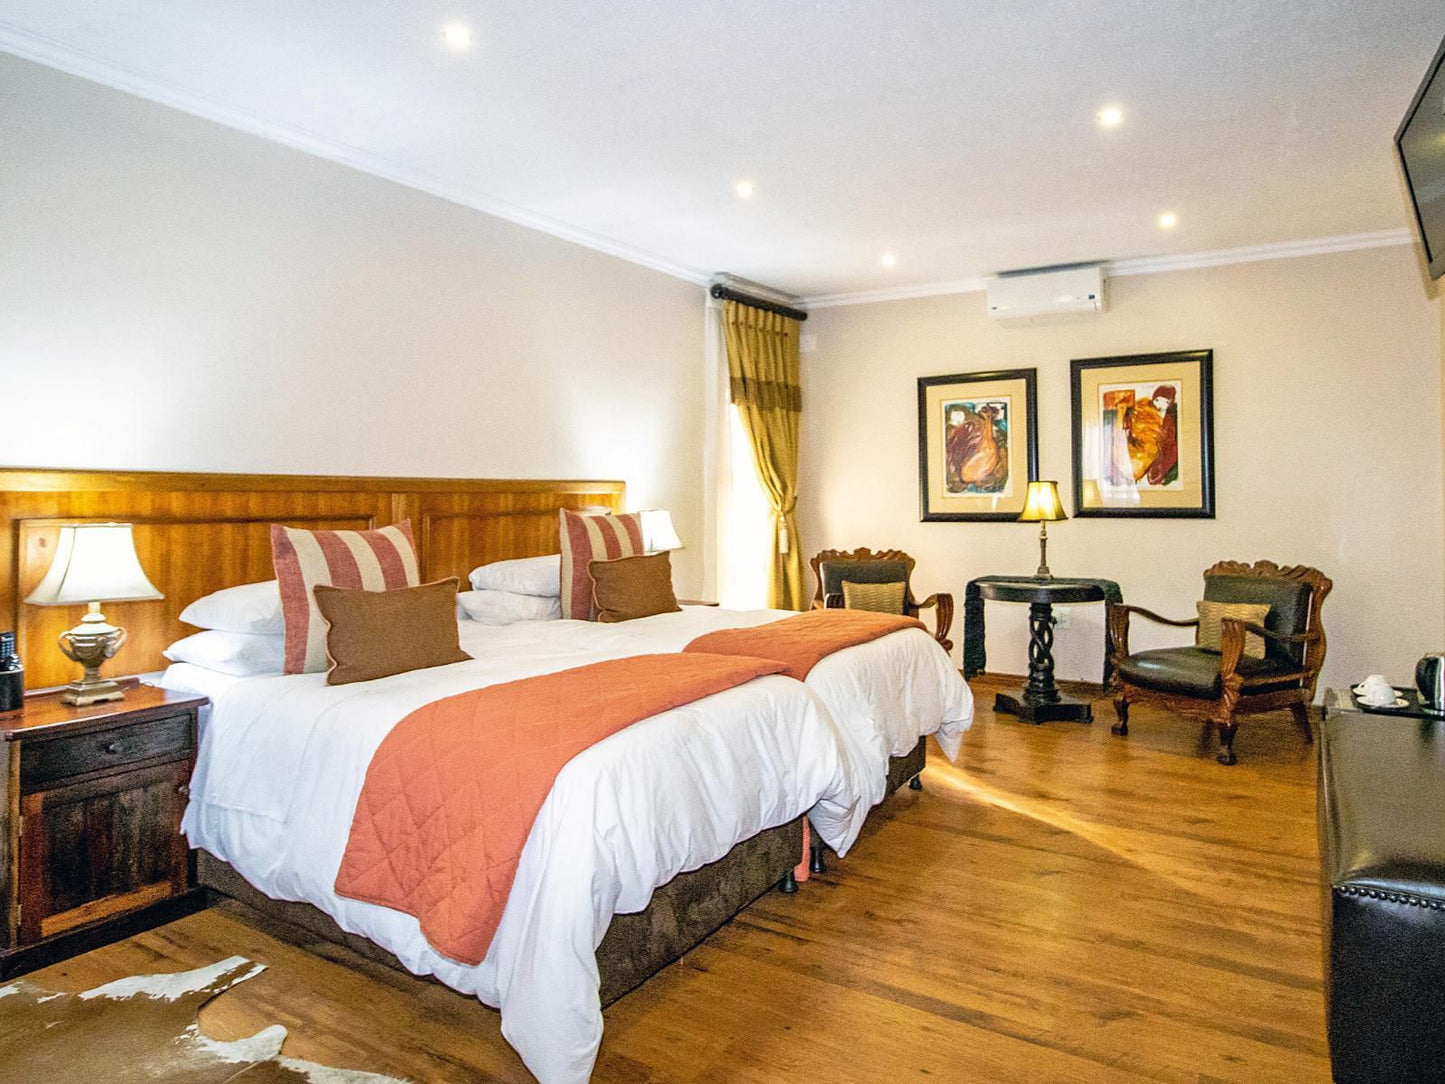 Sunward Park Guesthouse And Conference Centre Boksburg Johannesburg Gauteng South Africa Bedroom